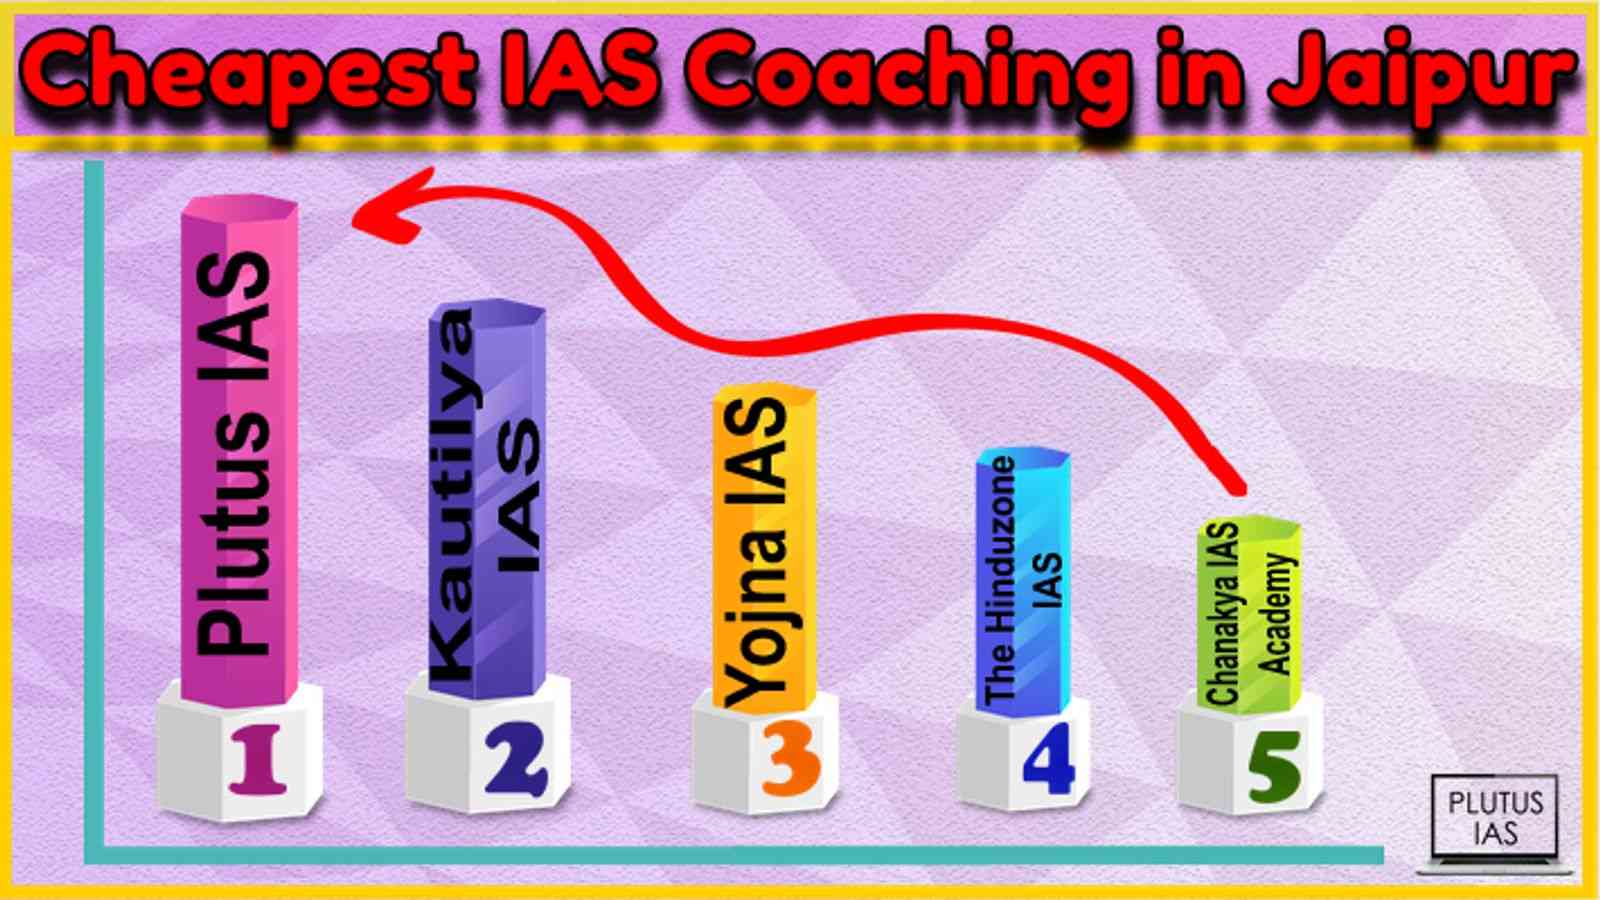 Cheapest IAS Coaching in Jaipur